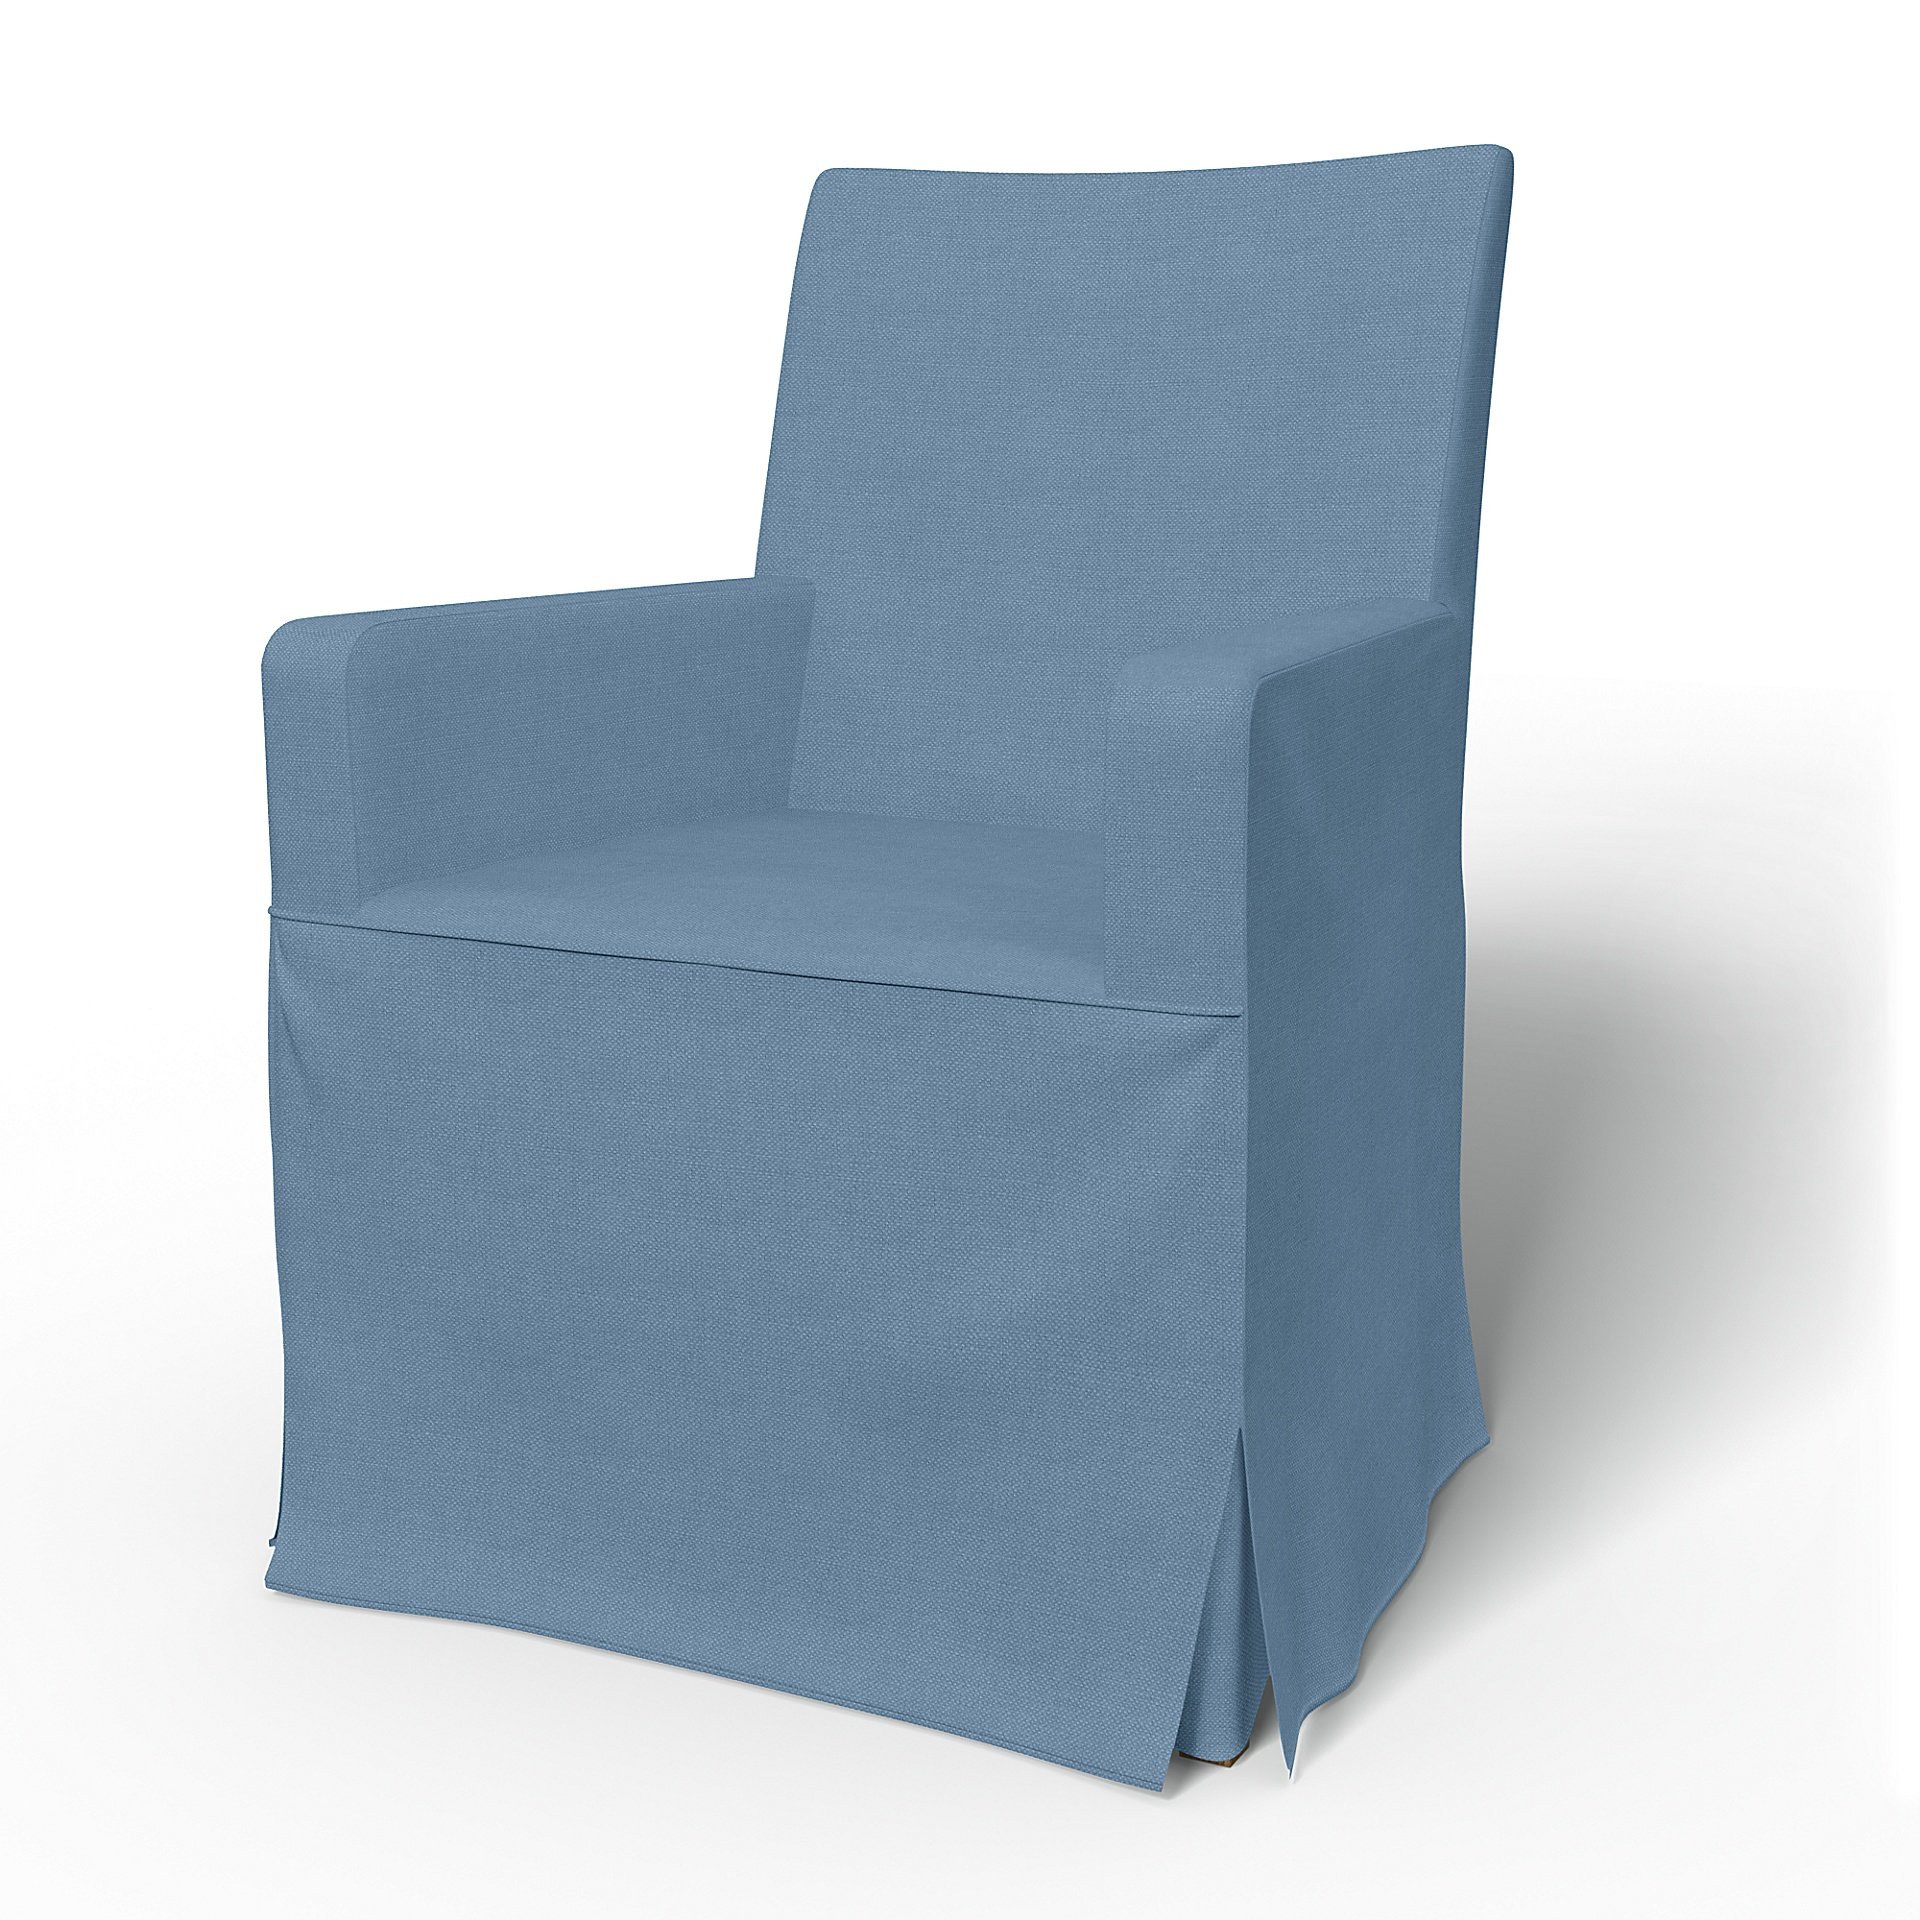 IKEA - Henriksdal, Chair cover w/ armrests, long skirt box pleat, Vintage Blue, Linen - Bemz